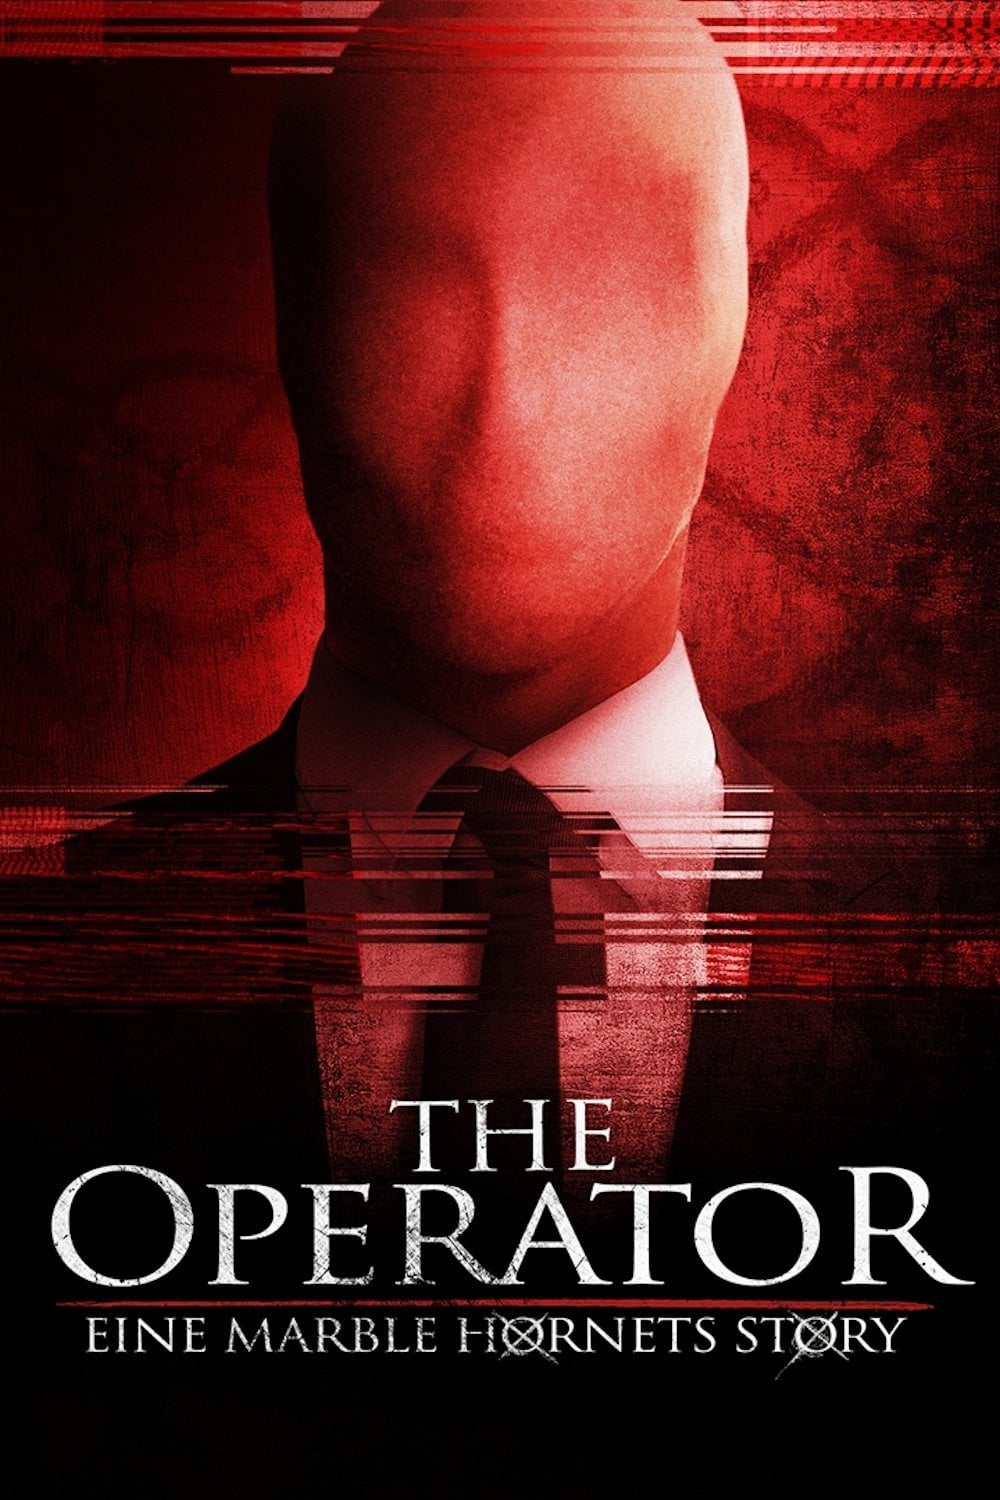 Plakat von "The Operator"